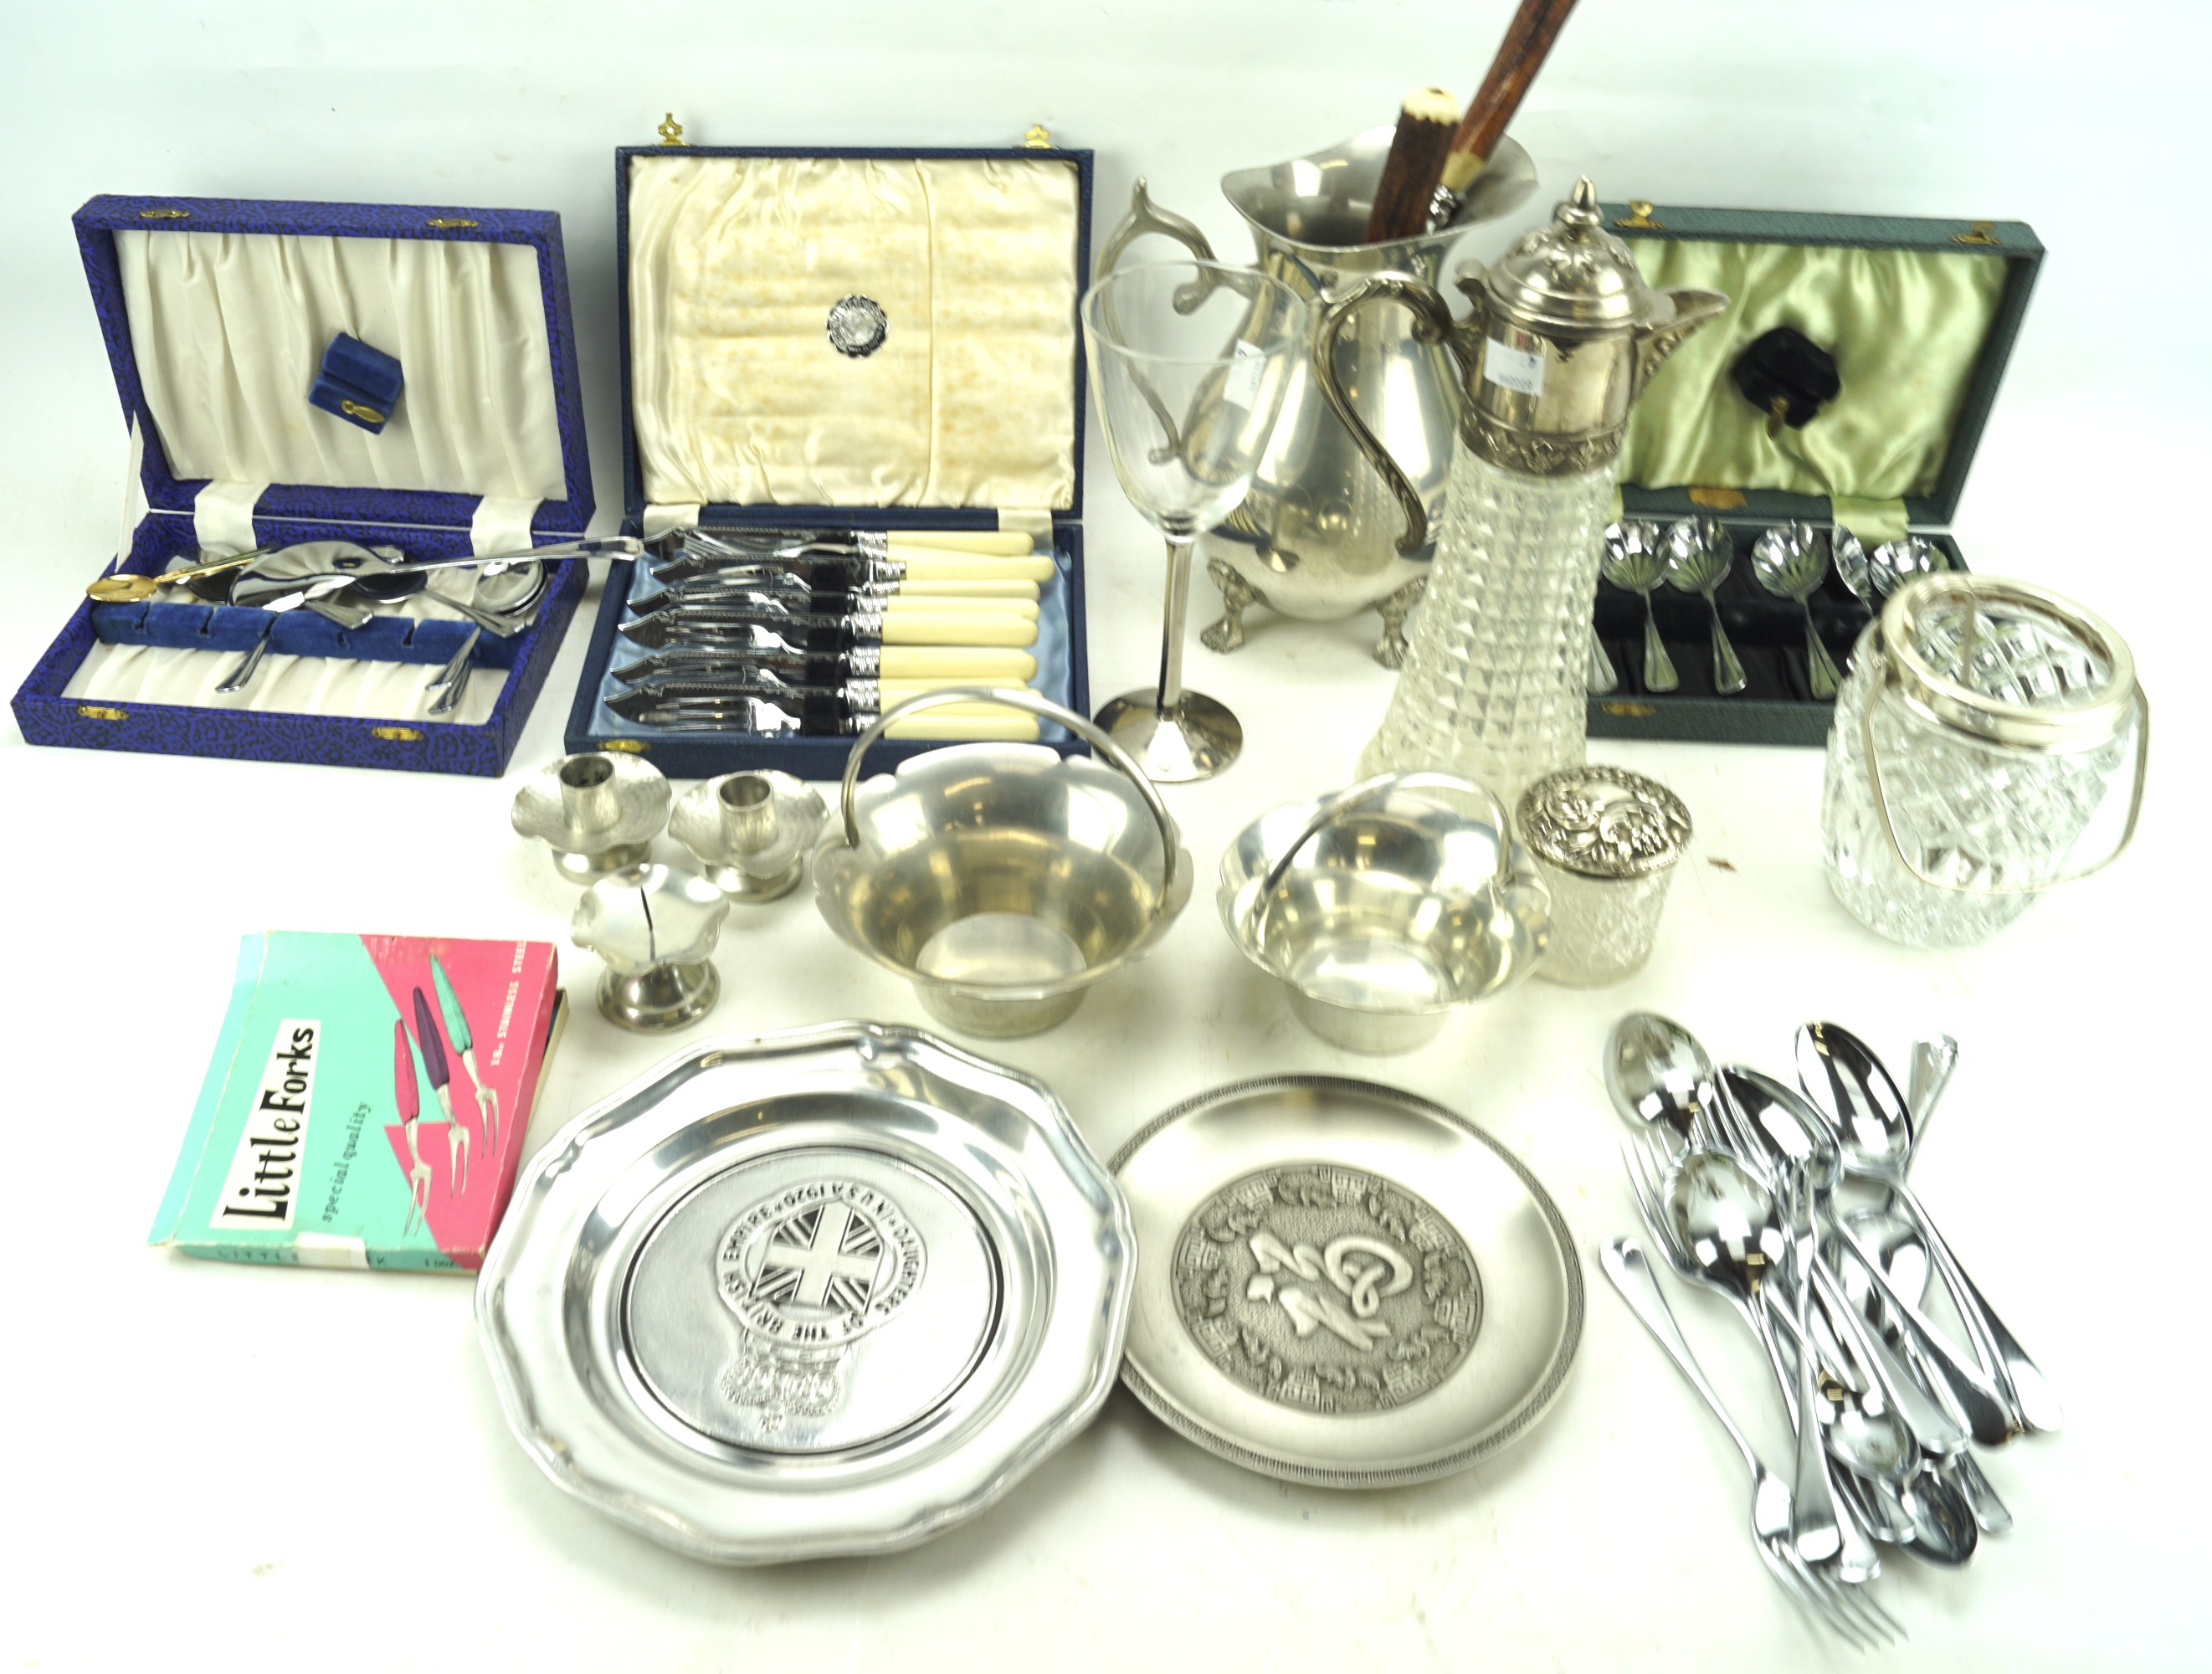 Assorted glass, flatware and metalware. Including a decanter, jug, lidded box, etc.